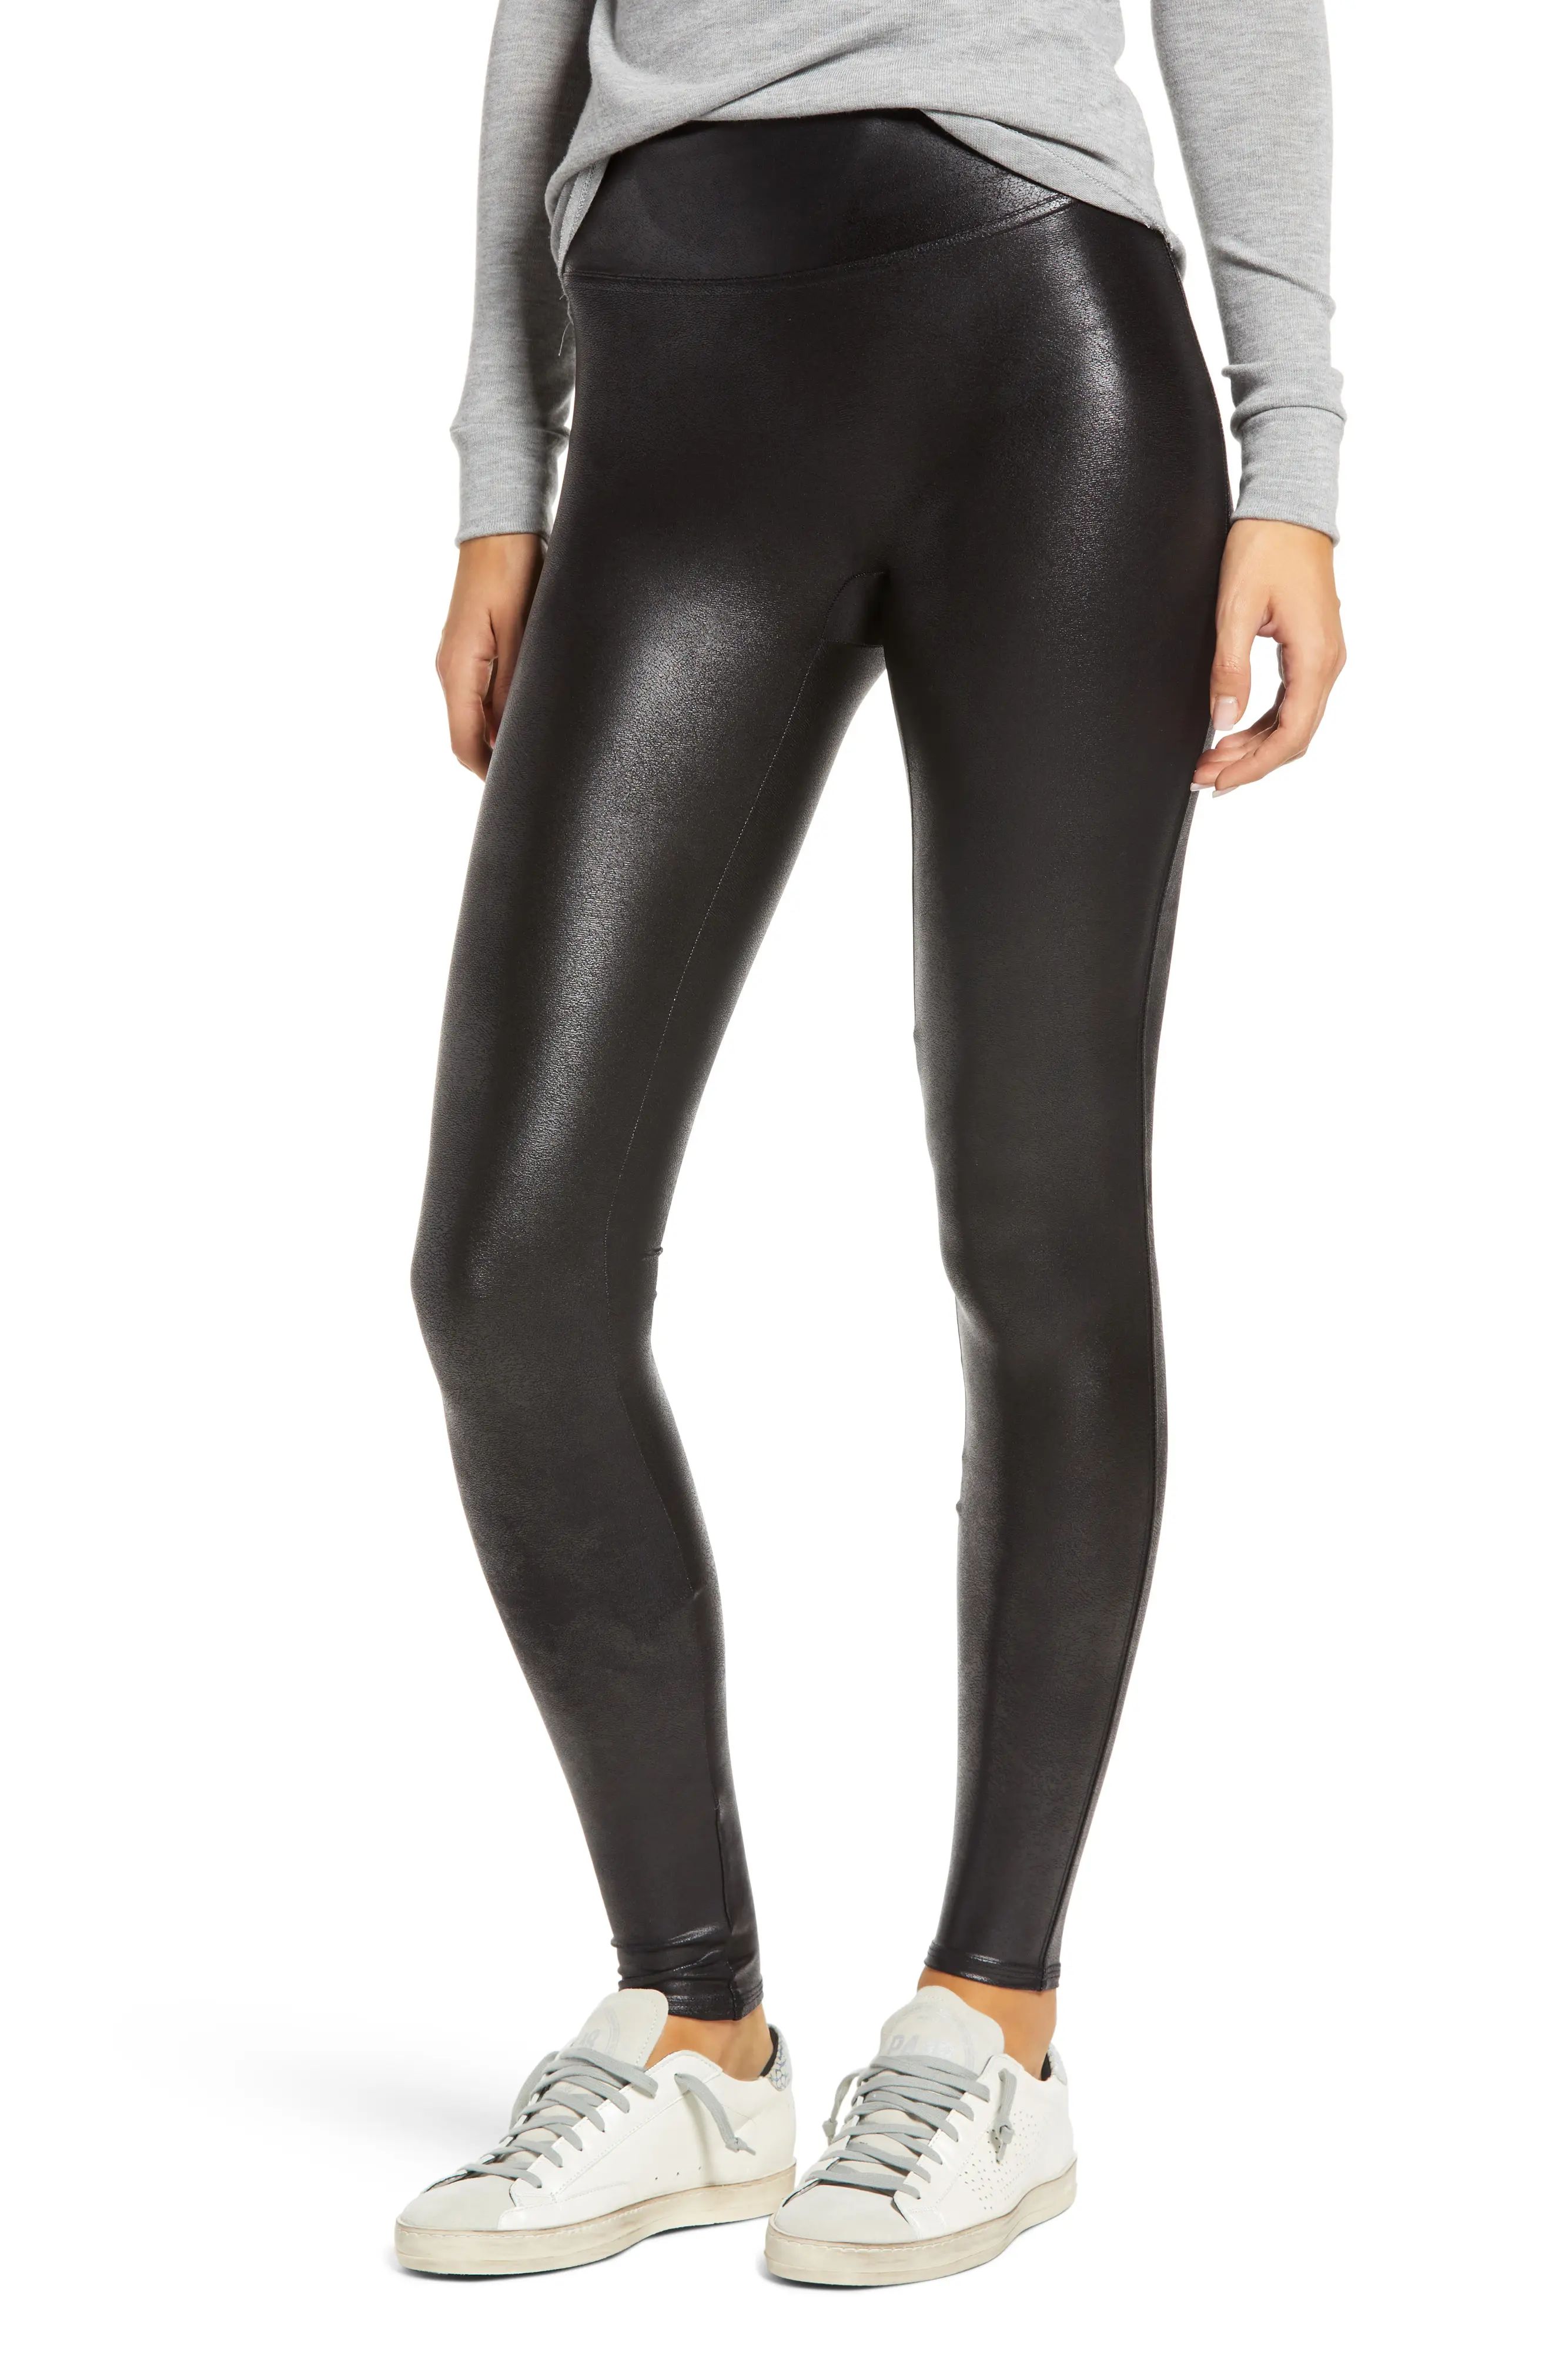 Plus Size Women's Spanx Faux Leather Leggings (Regular, Petite & Plus Size) | Nordstrom